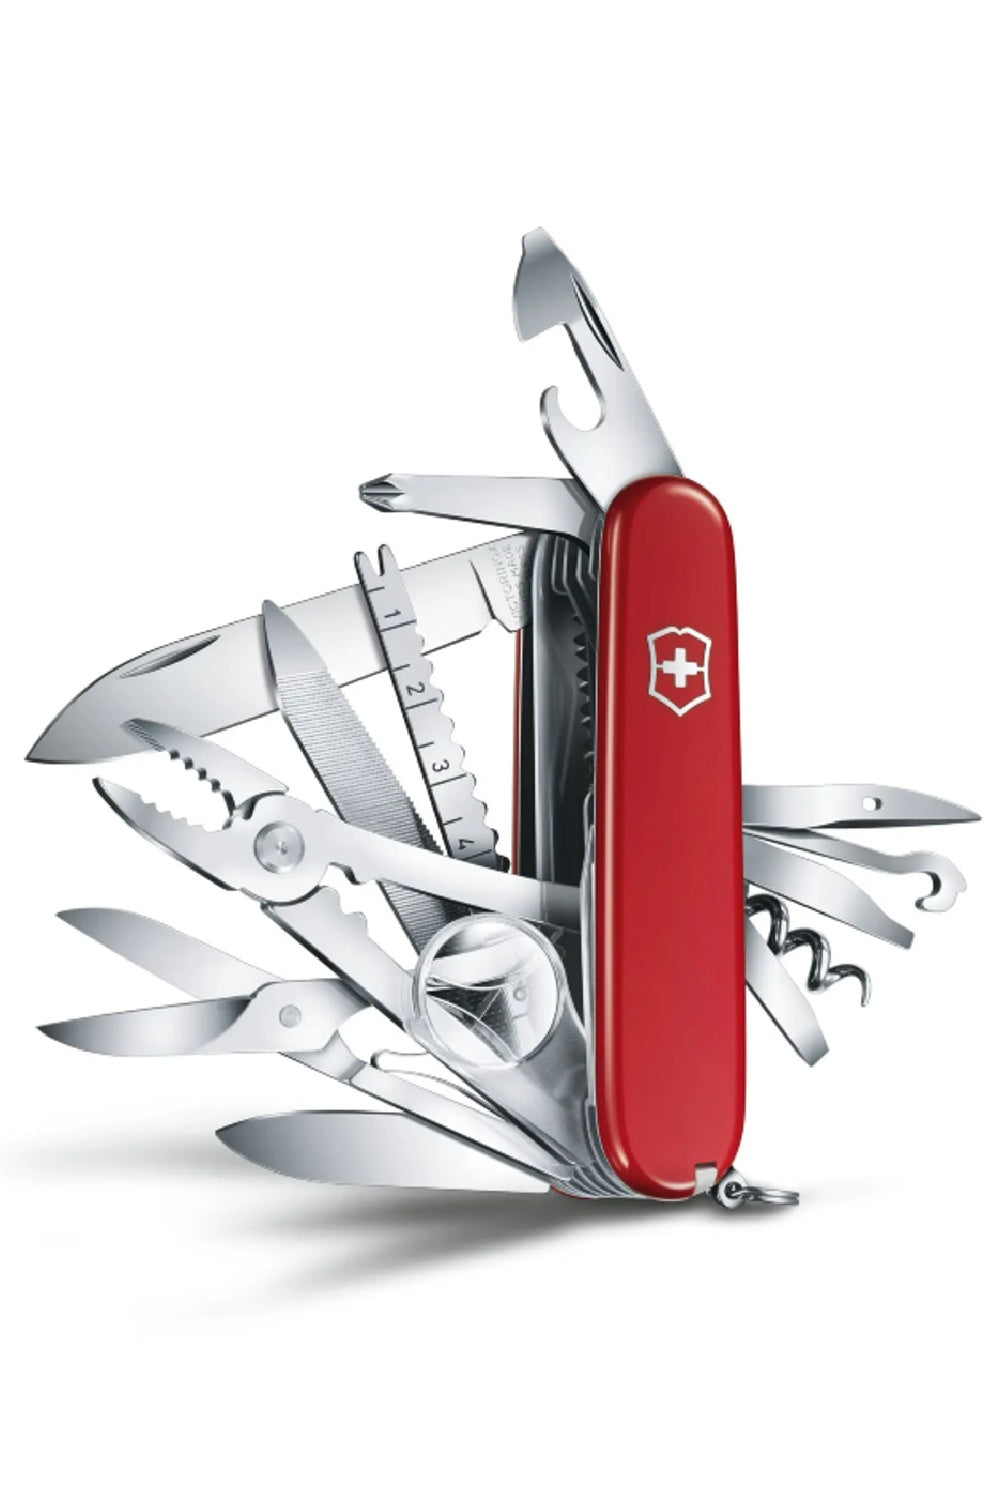 Victorinox - Swisschamp XXL 73 Functions - V-1.6795.XXL - utility knife